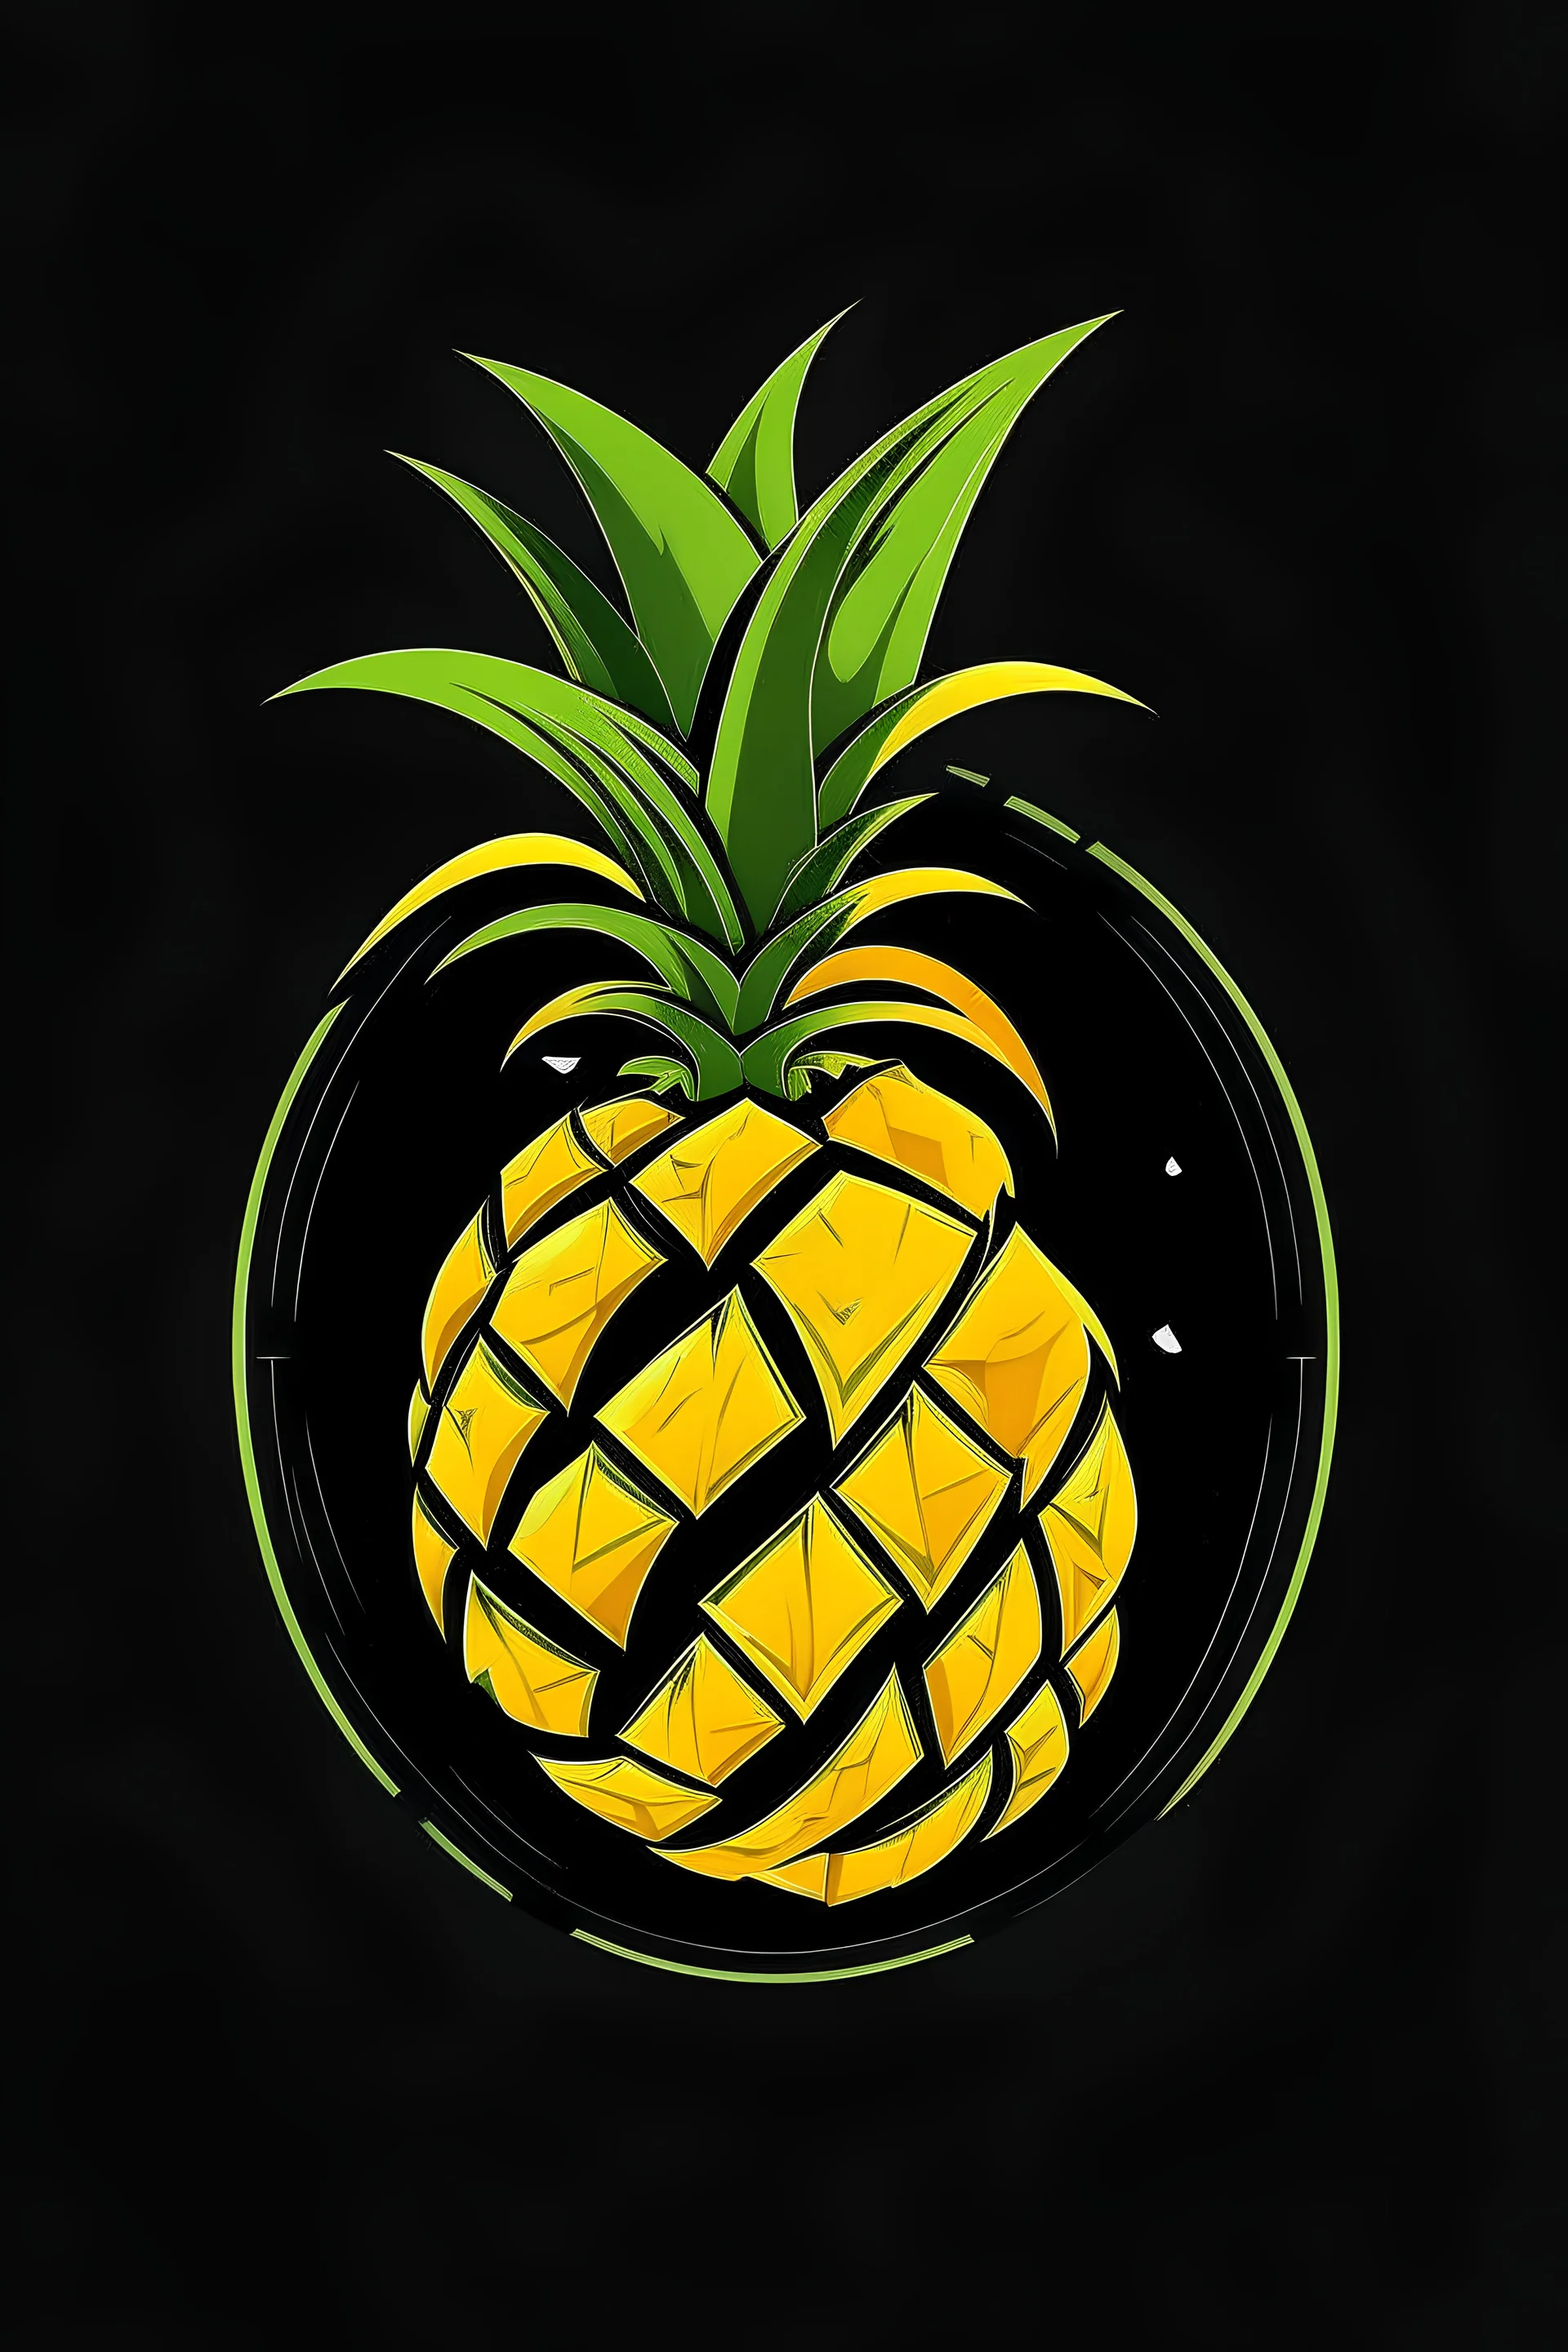 buatkan saya logo produk dari limbah pelepah pisang dan kulit nanas